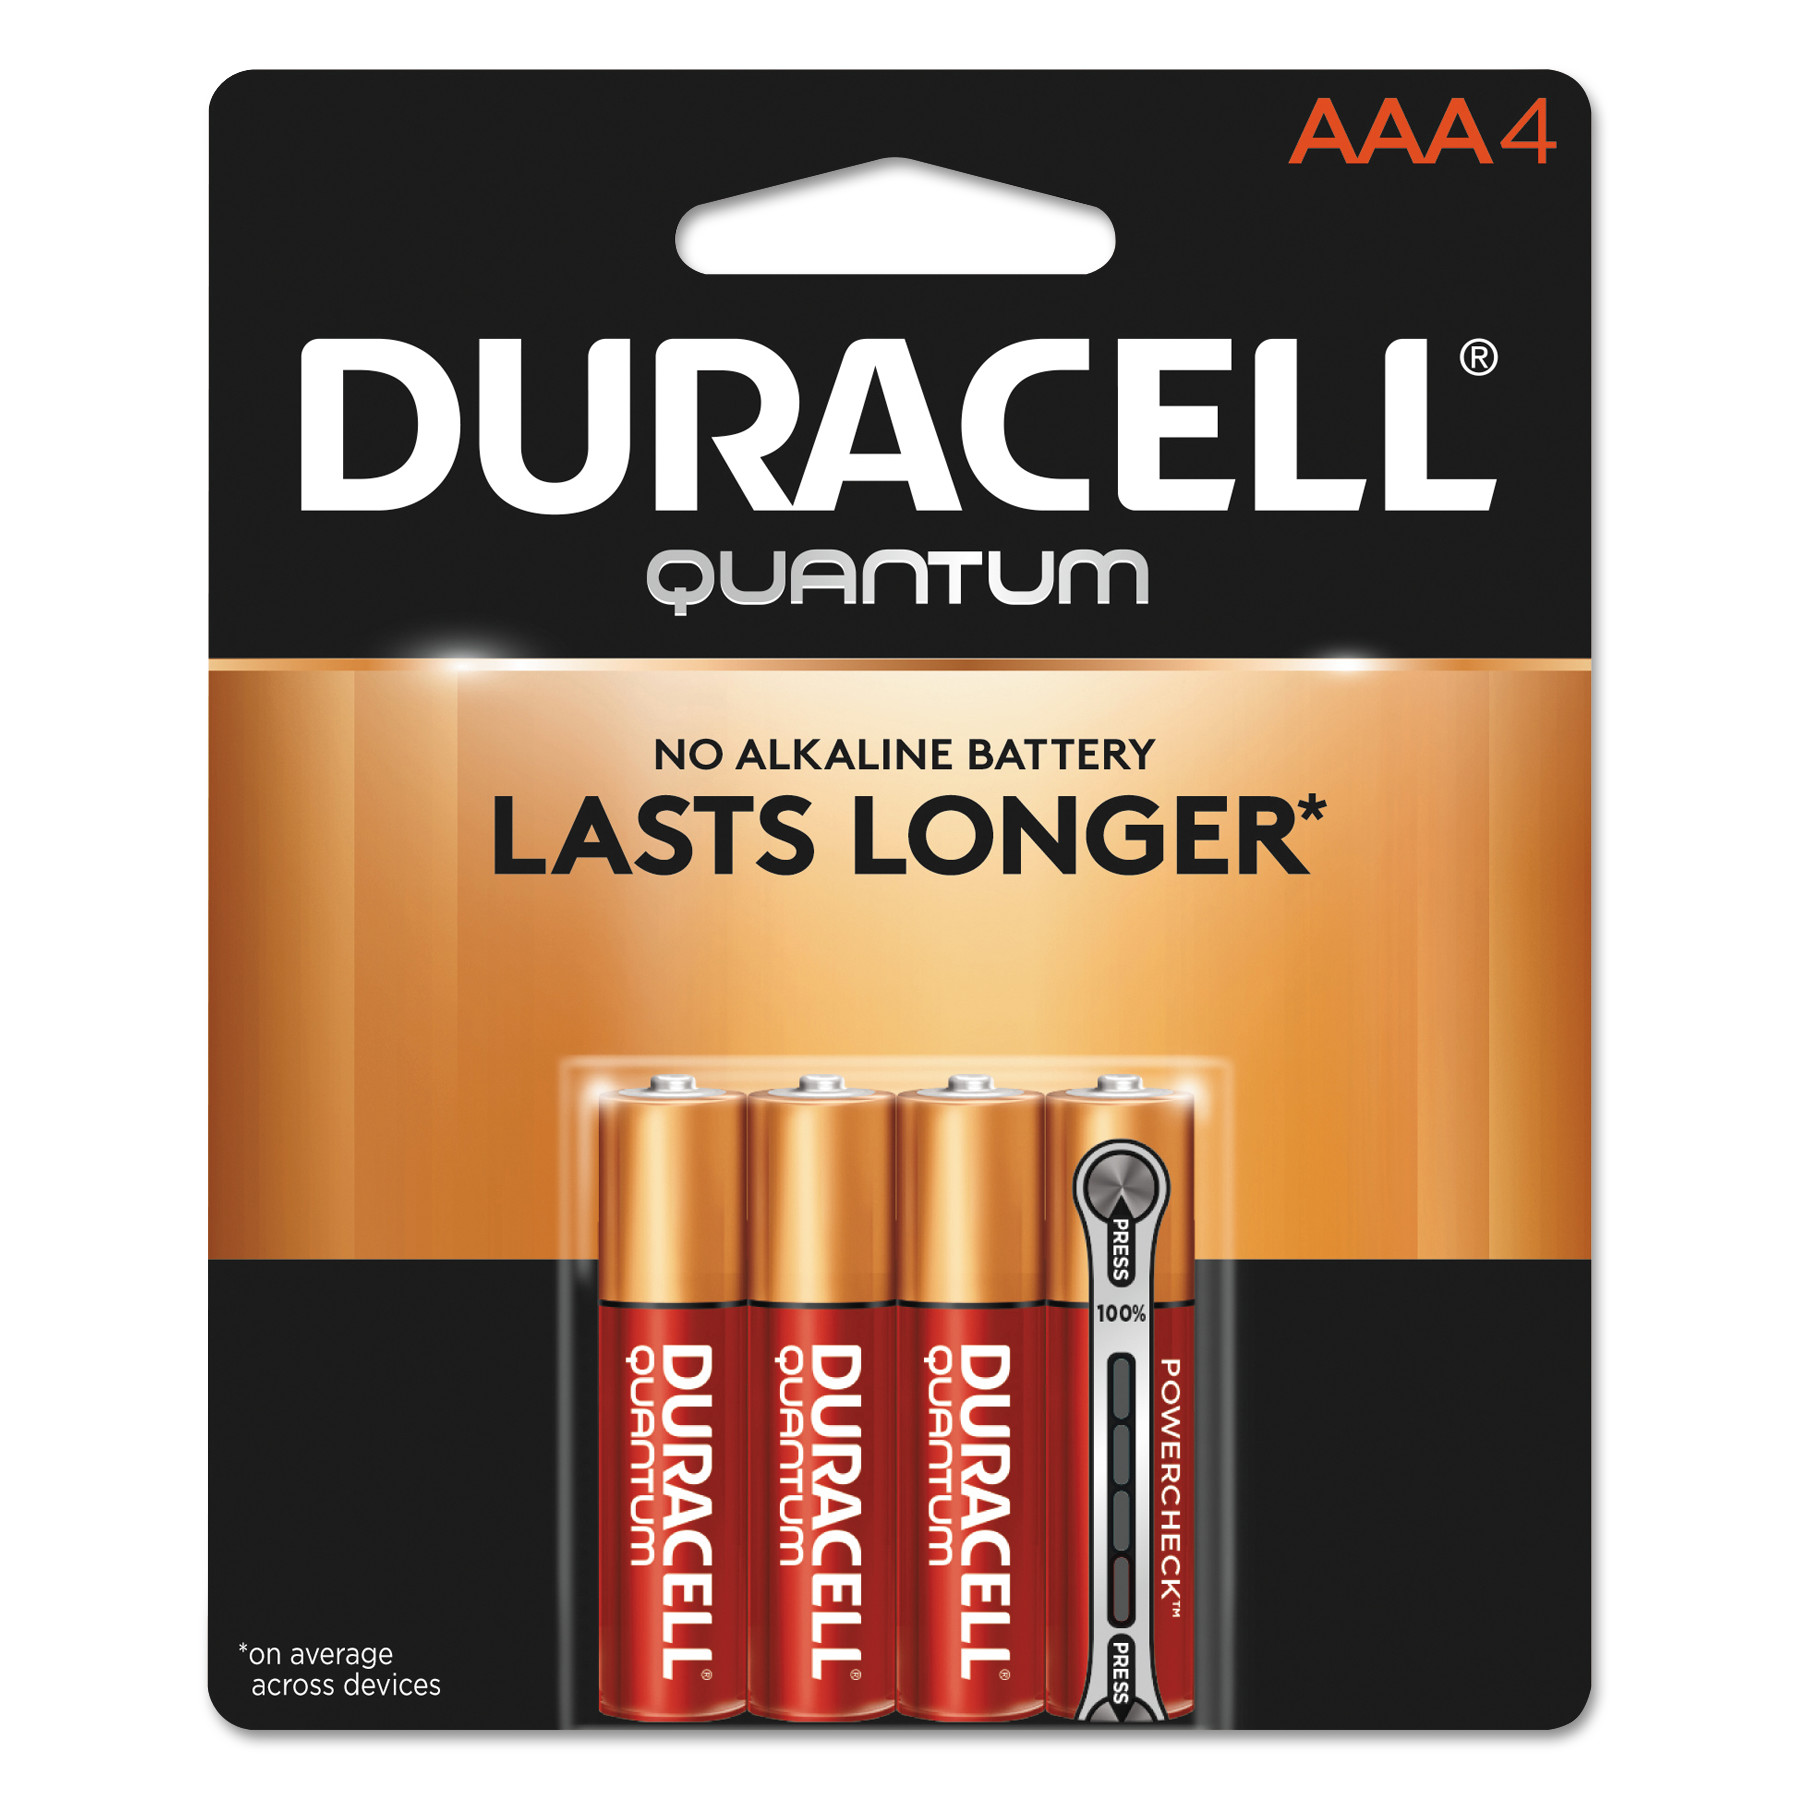  Duracell QU2400B4Z Quantum Alkaline AAA Batteries, 4/Pack (DURQU2400B4Z) 